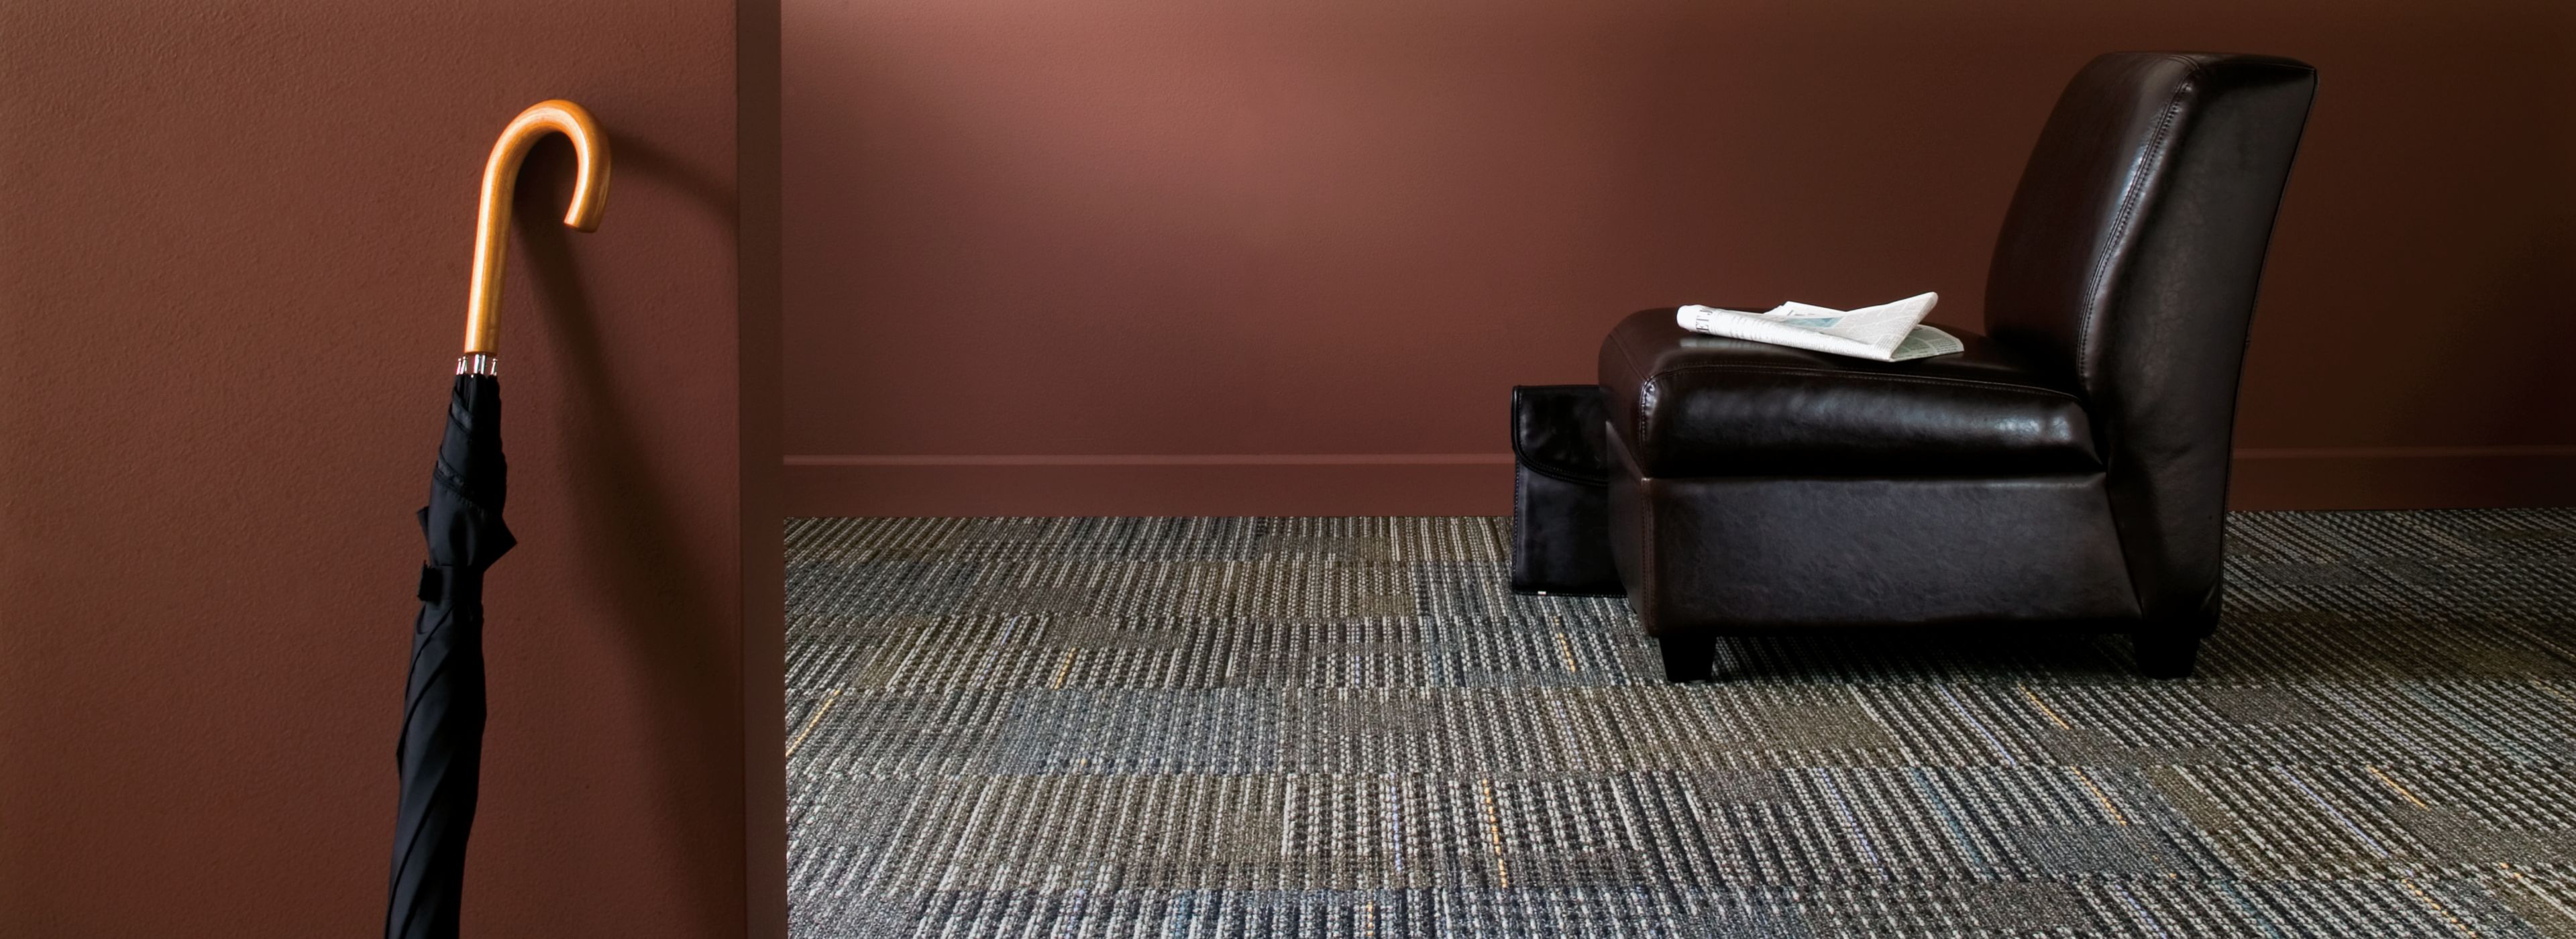 Interface Cotswold II carpet tile with black chair and umbrella numéro d’image 1